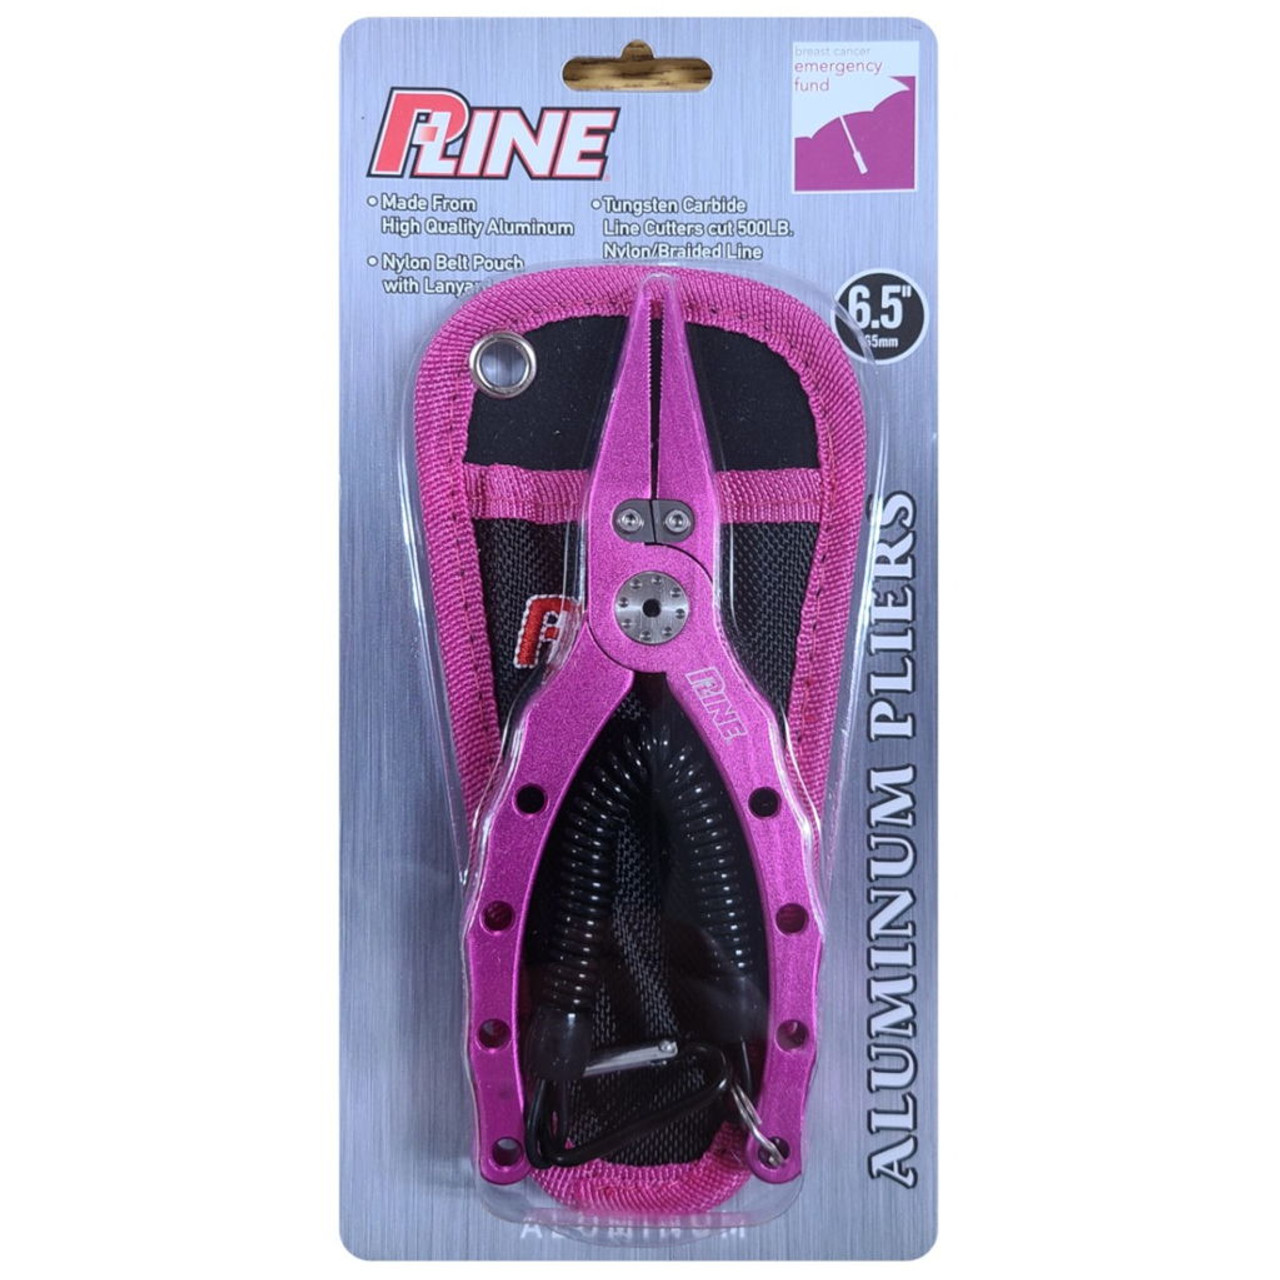 P-Line Aluminum 6.5 inch Pliers - Pink